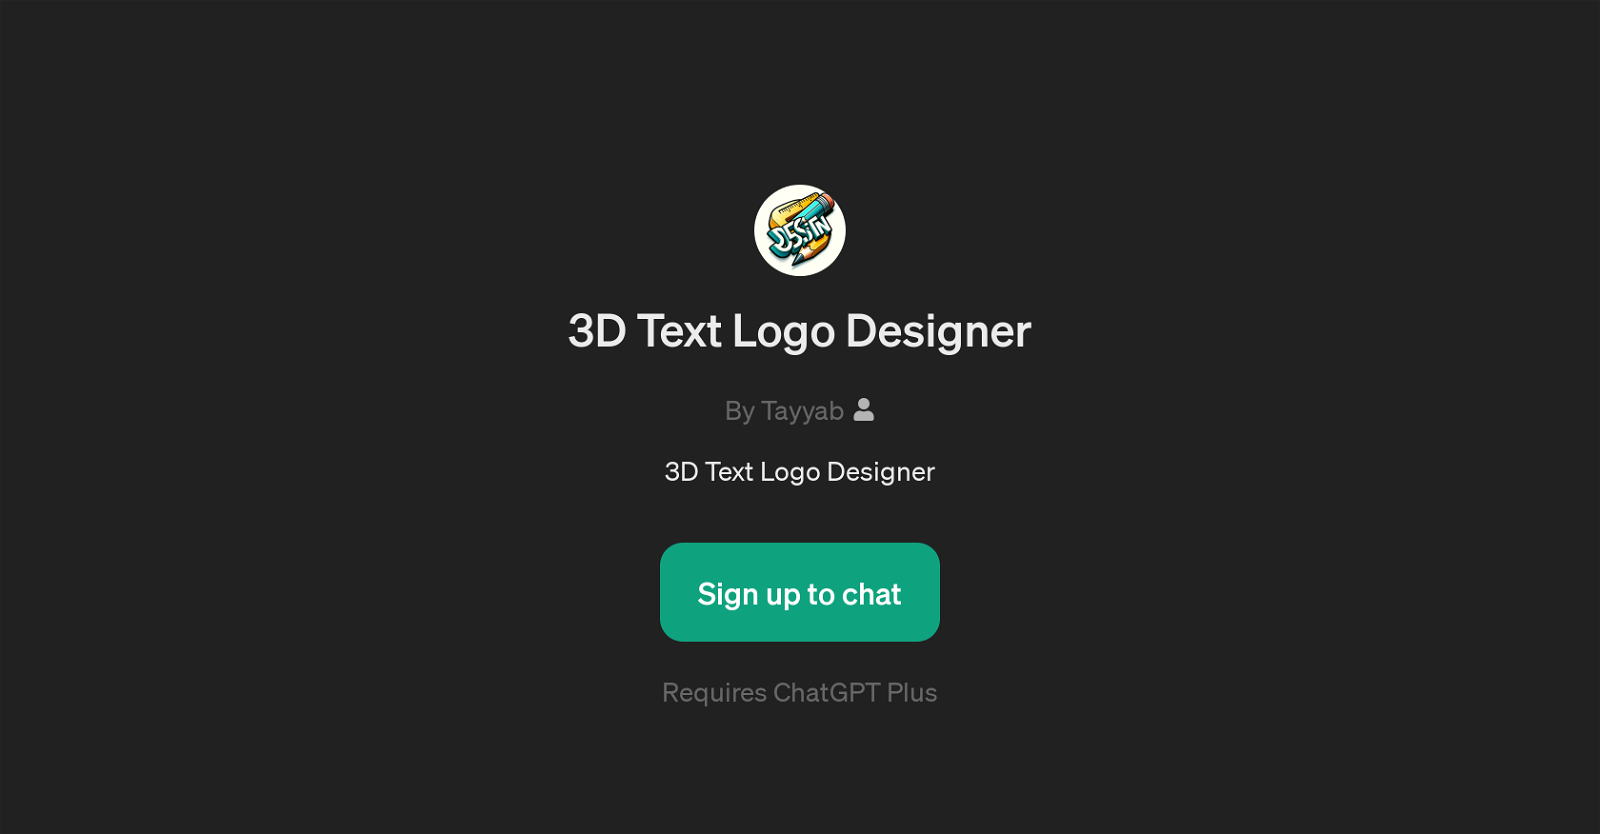 3D Text Logo Designer website